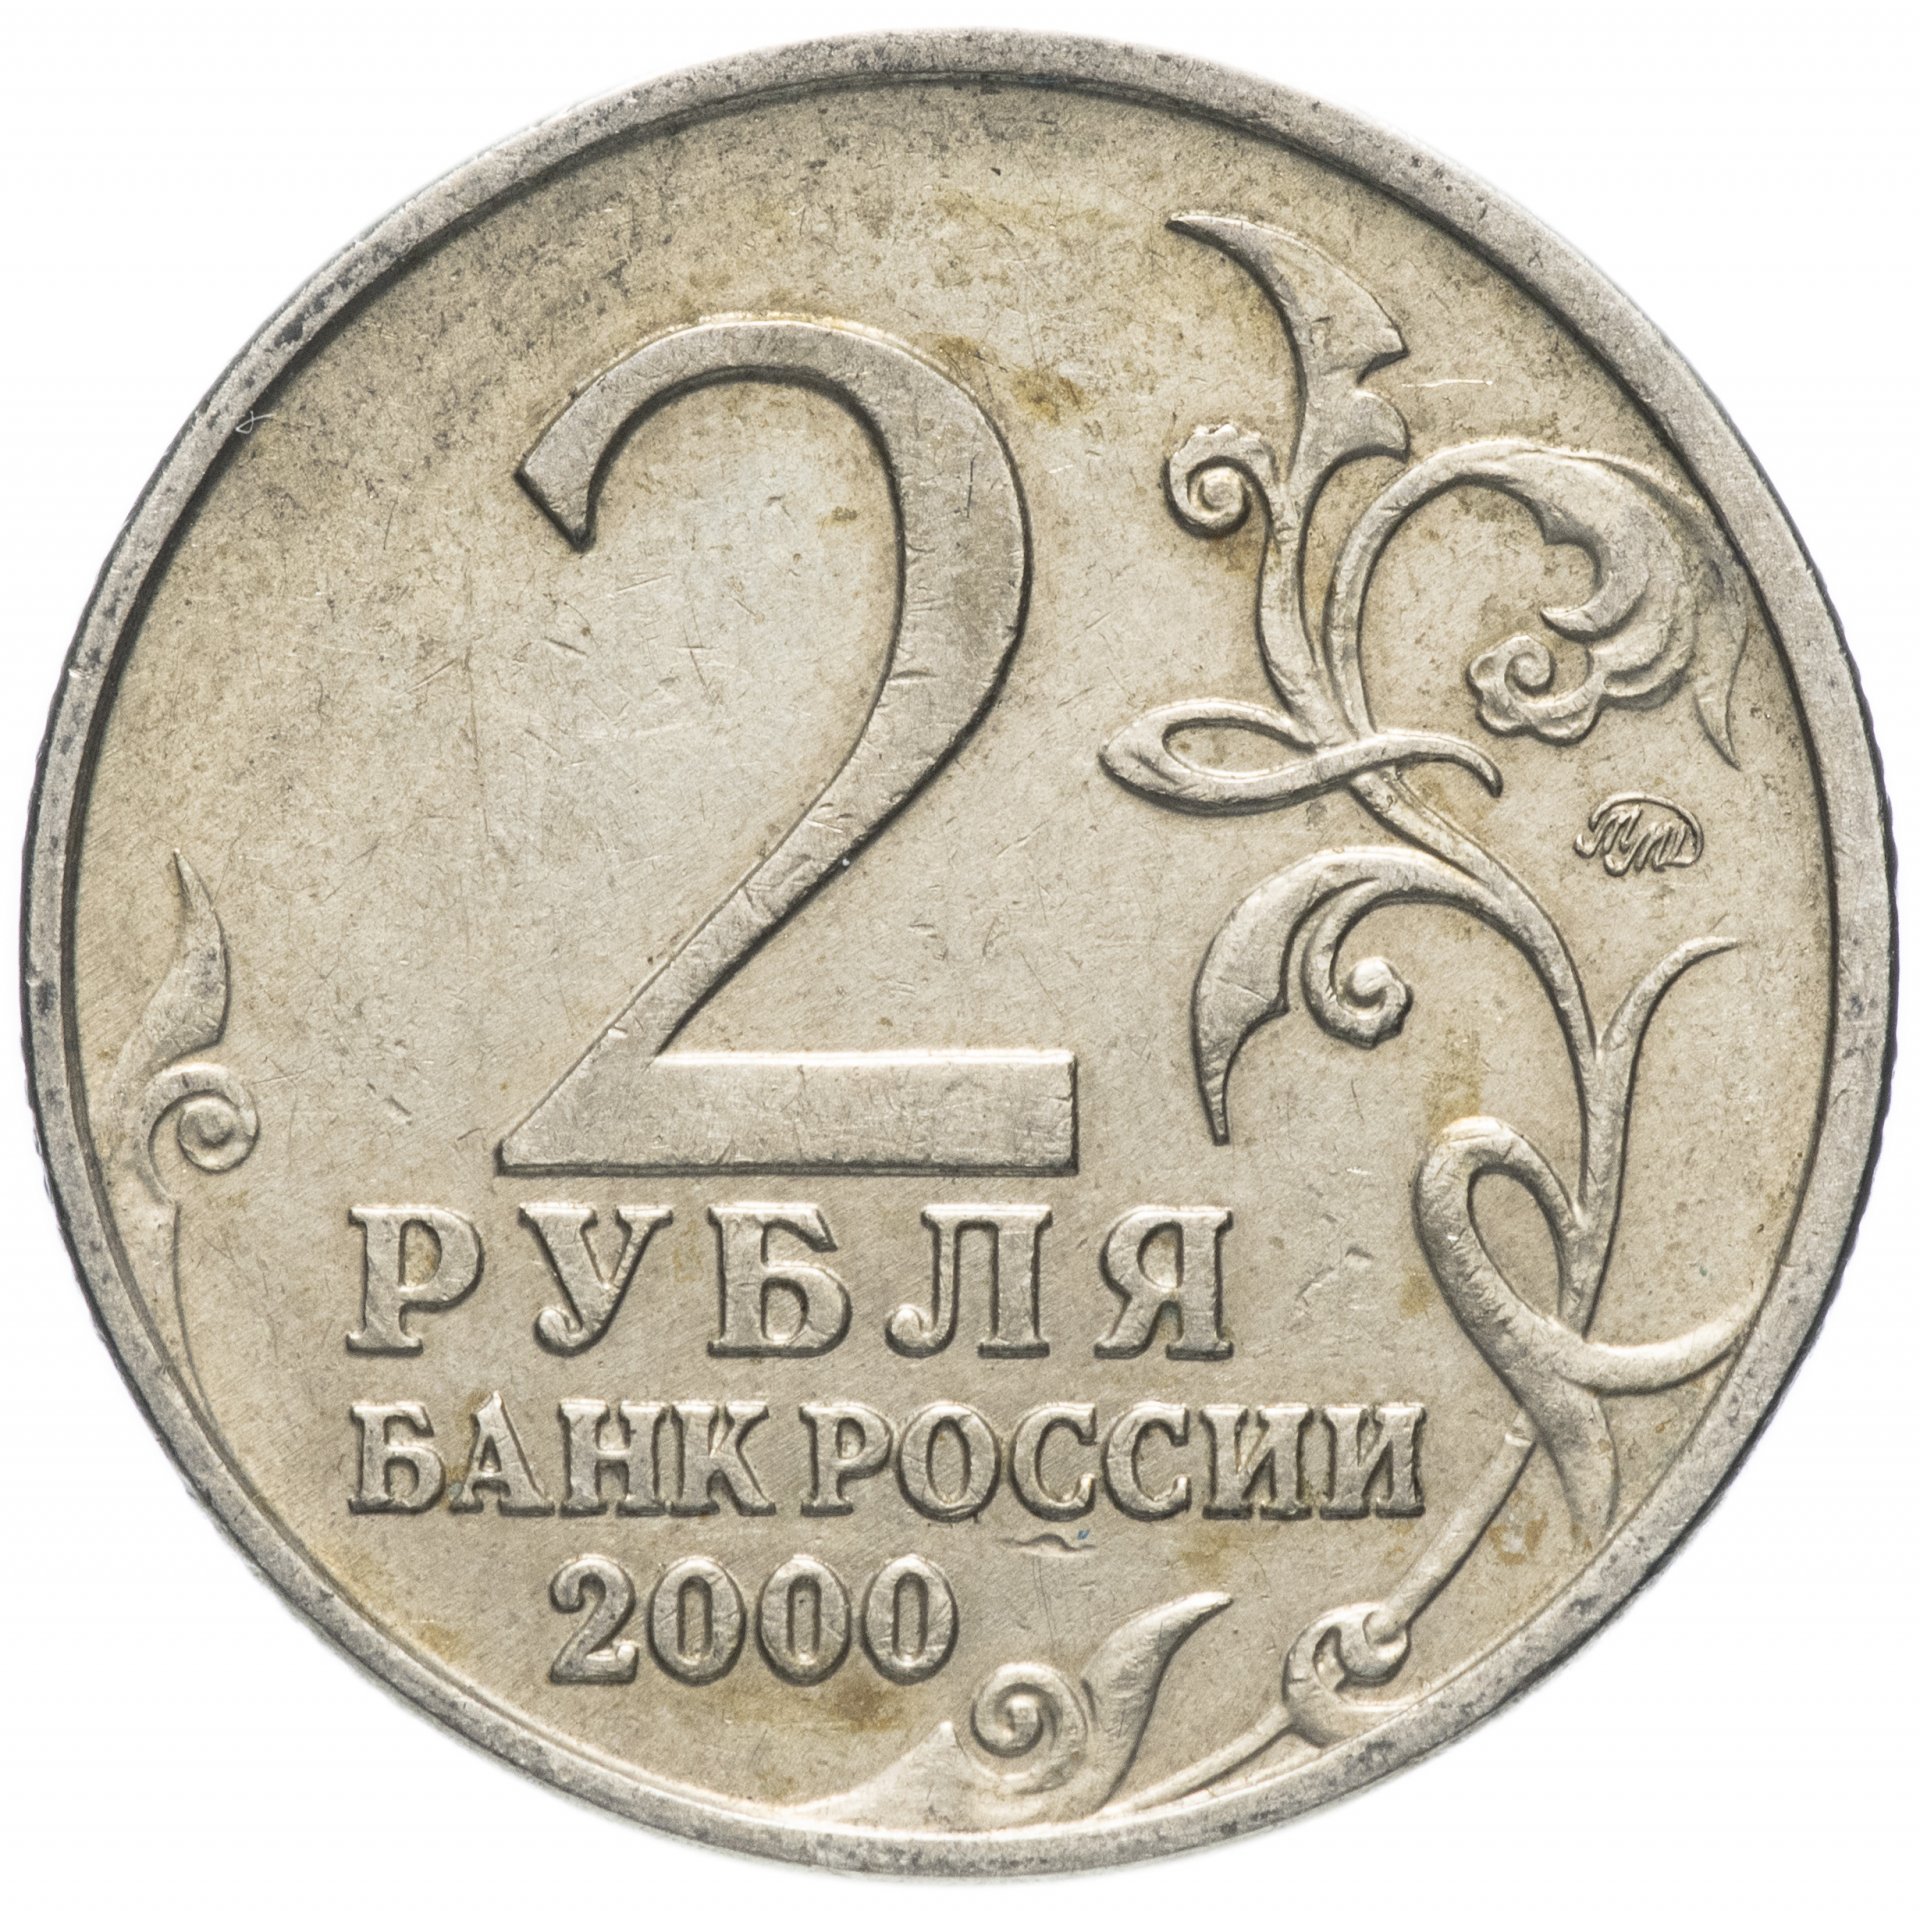 Юбилейный год 2012. Монета 2 рубля. Монета 2 рубля 2000 года. Юбилейные монеты 2 рубля. Юбилейная монета 2 рубля 2000 года.